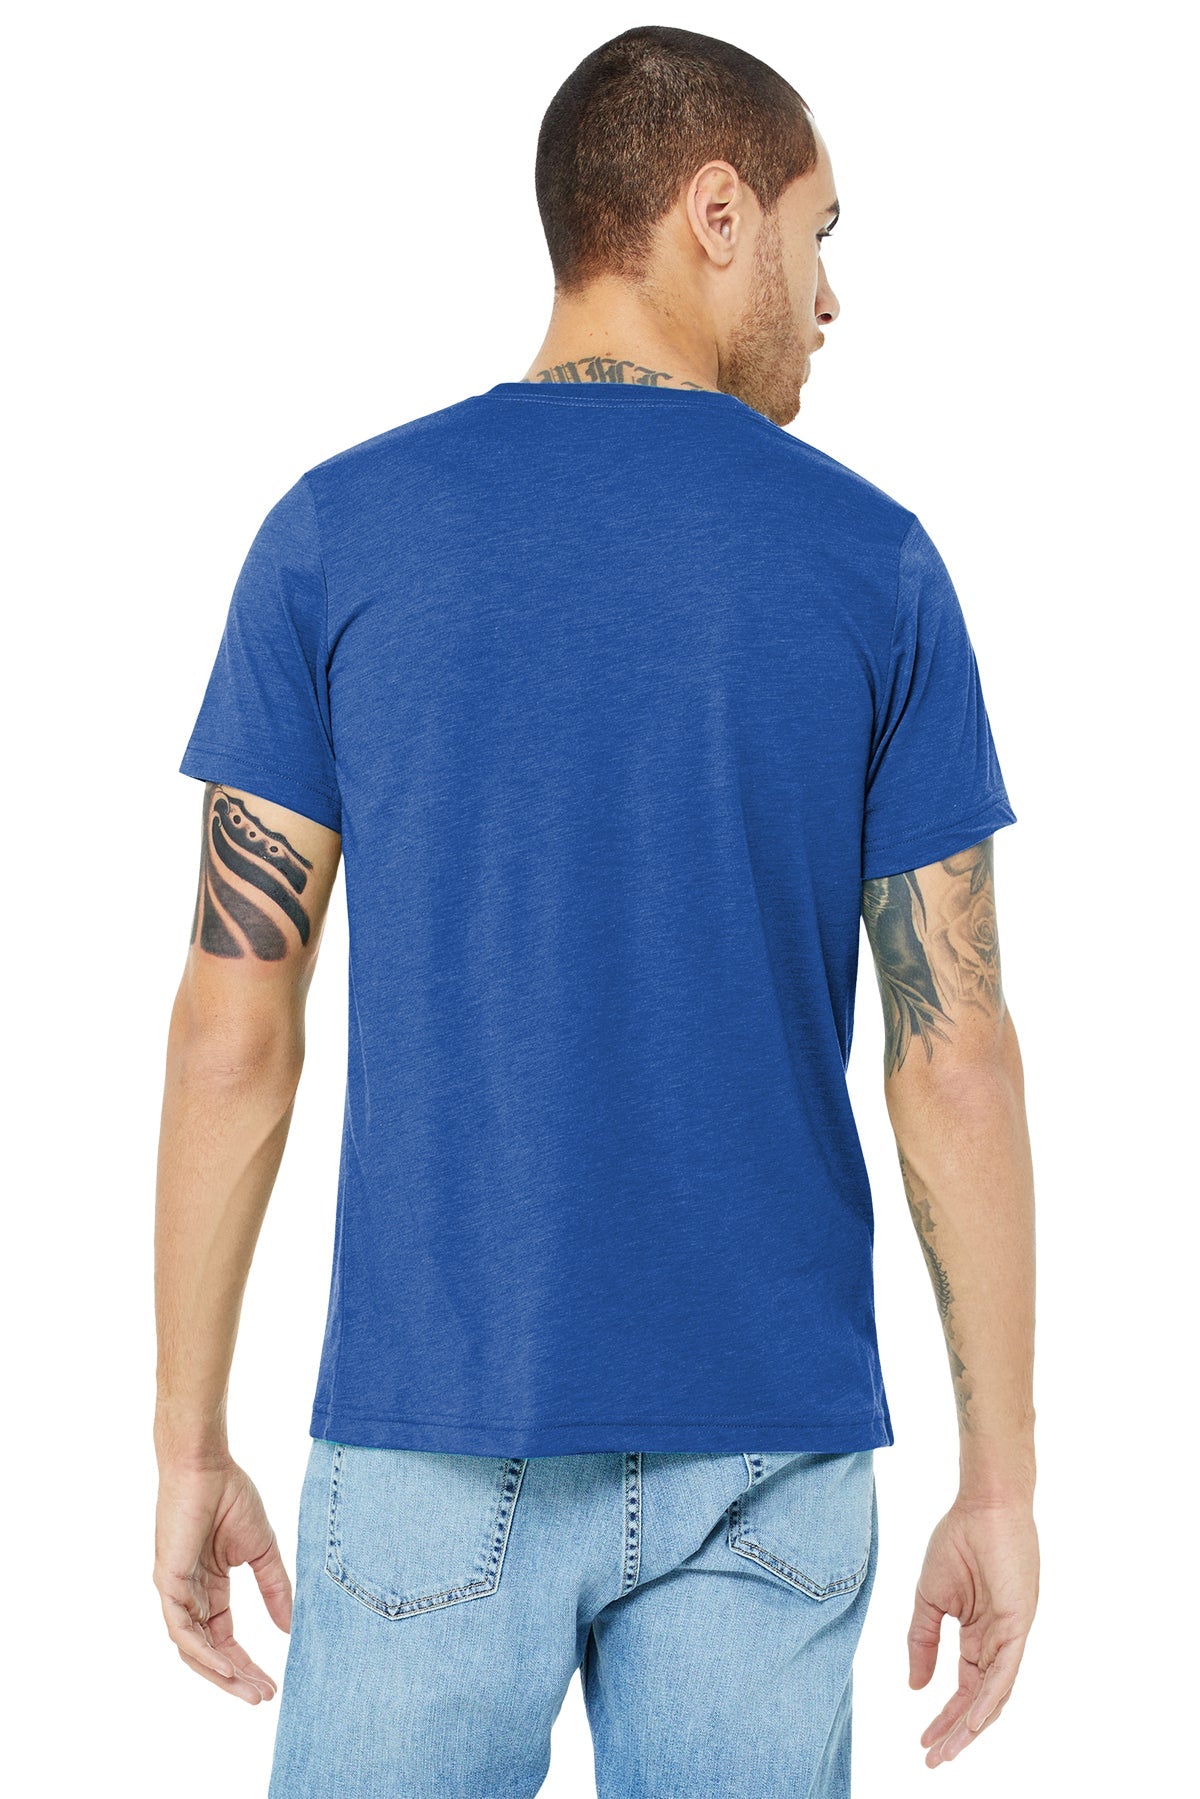 bella + canvas unisex triblend short sleeve t-shirt 3413c true royal trbln